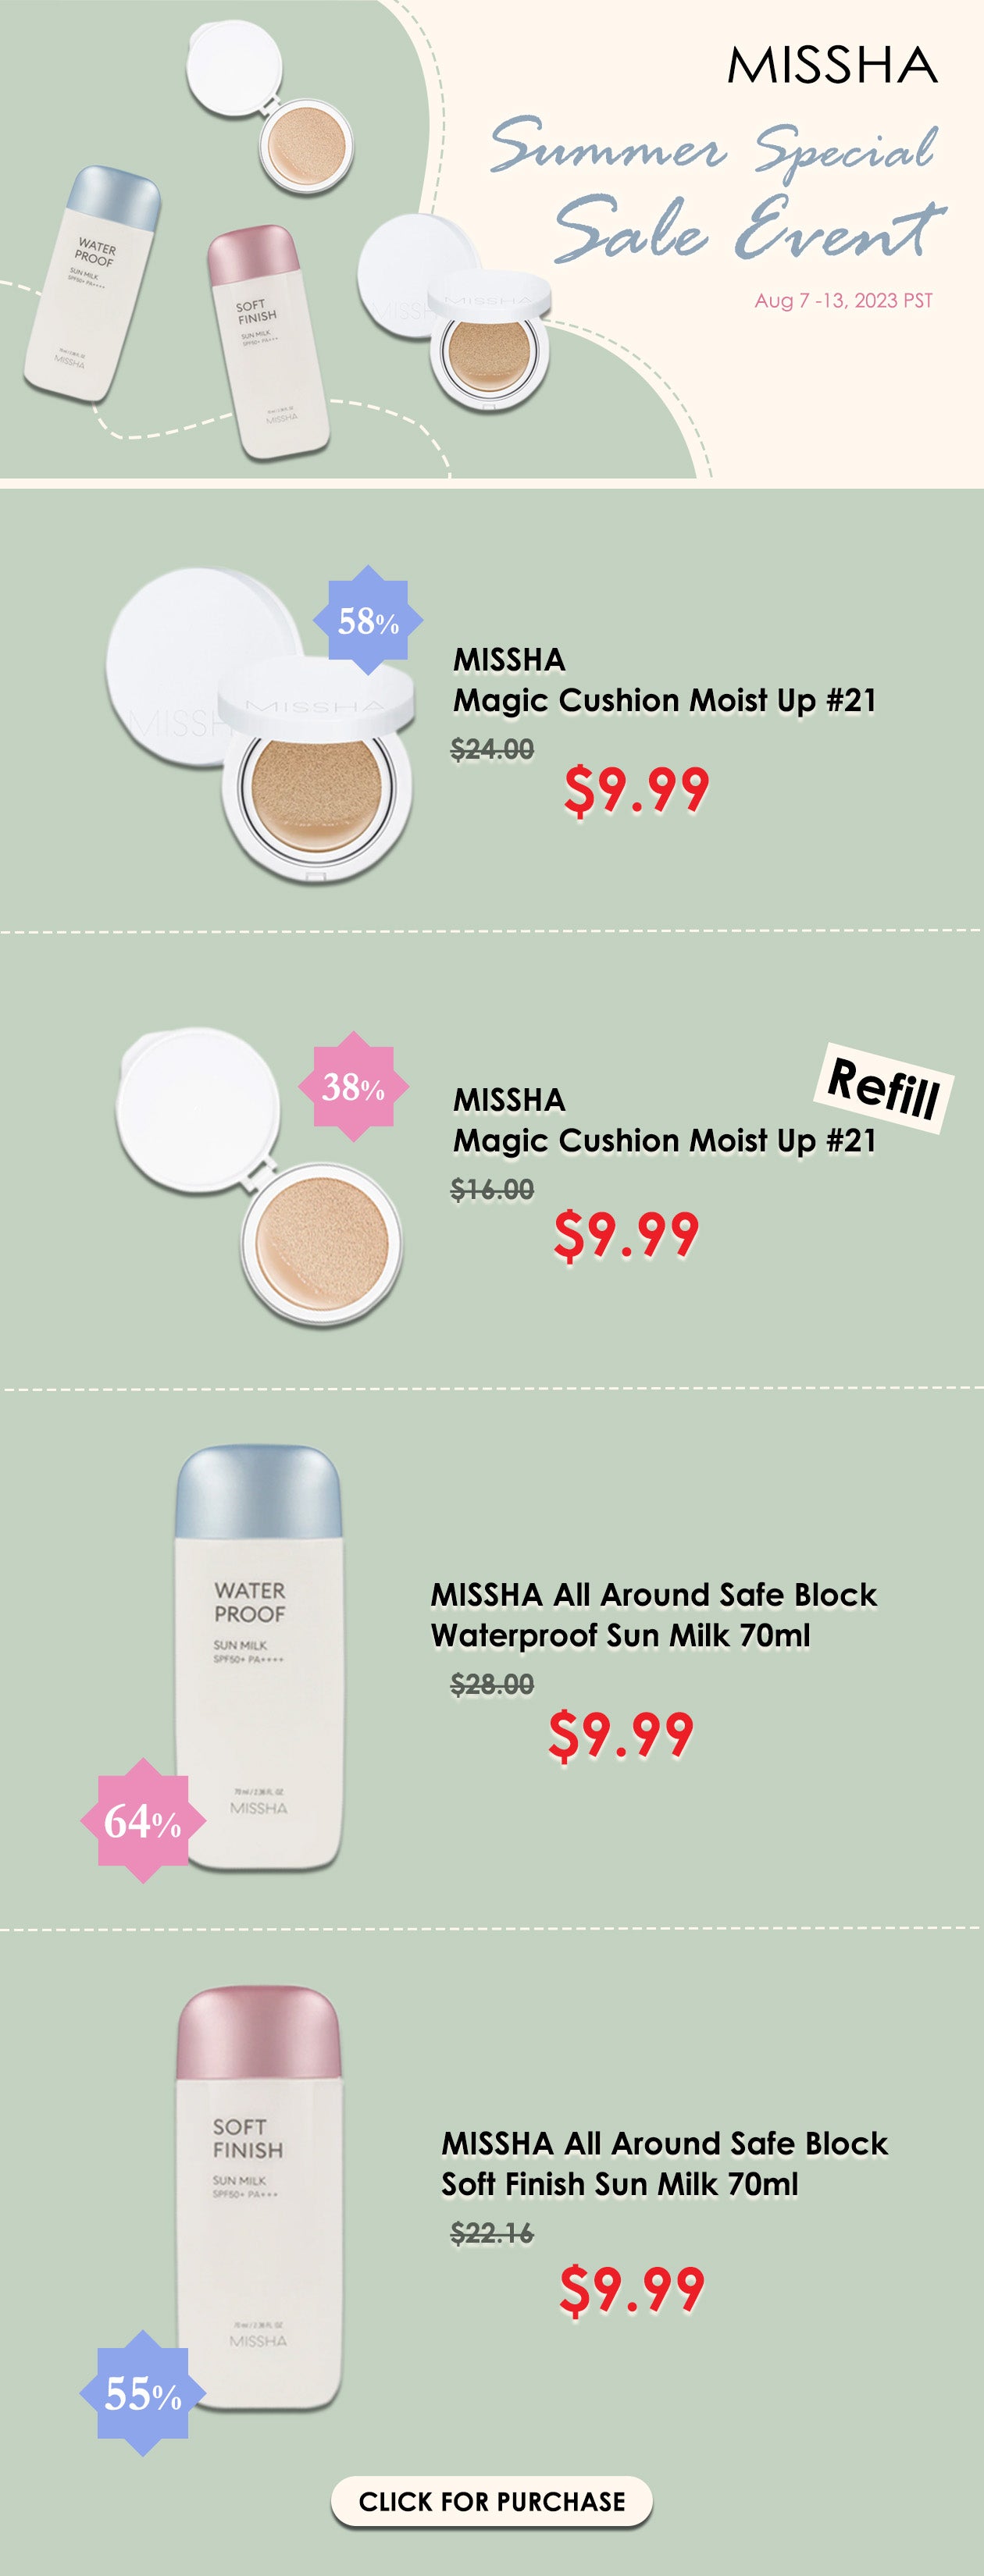 Missha summer sale event products detail